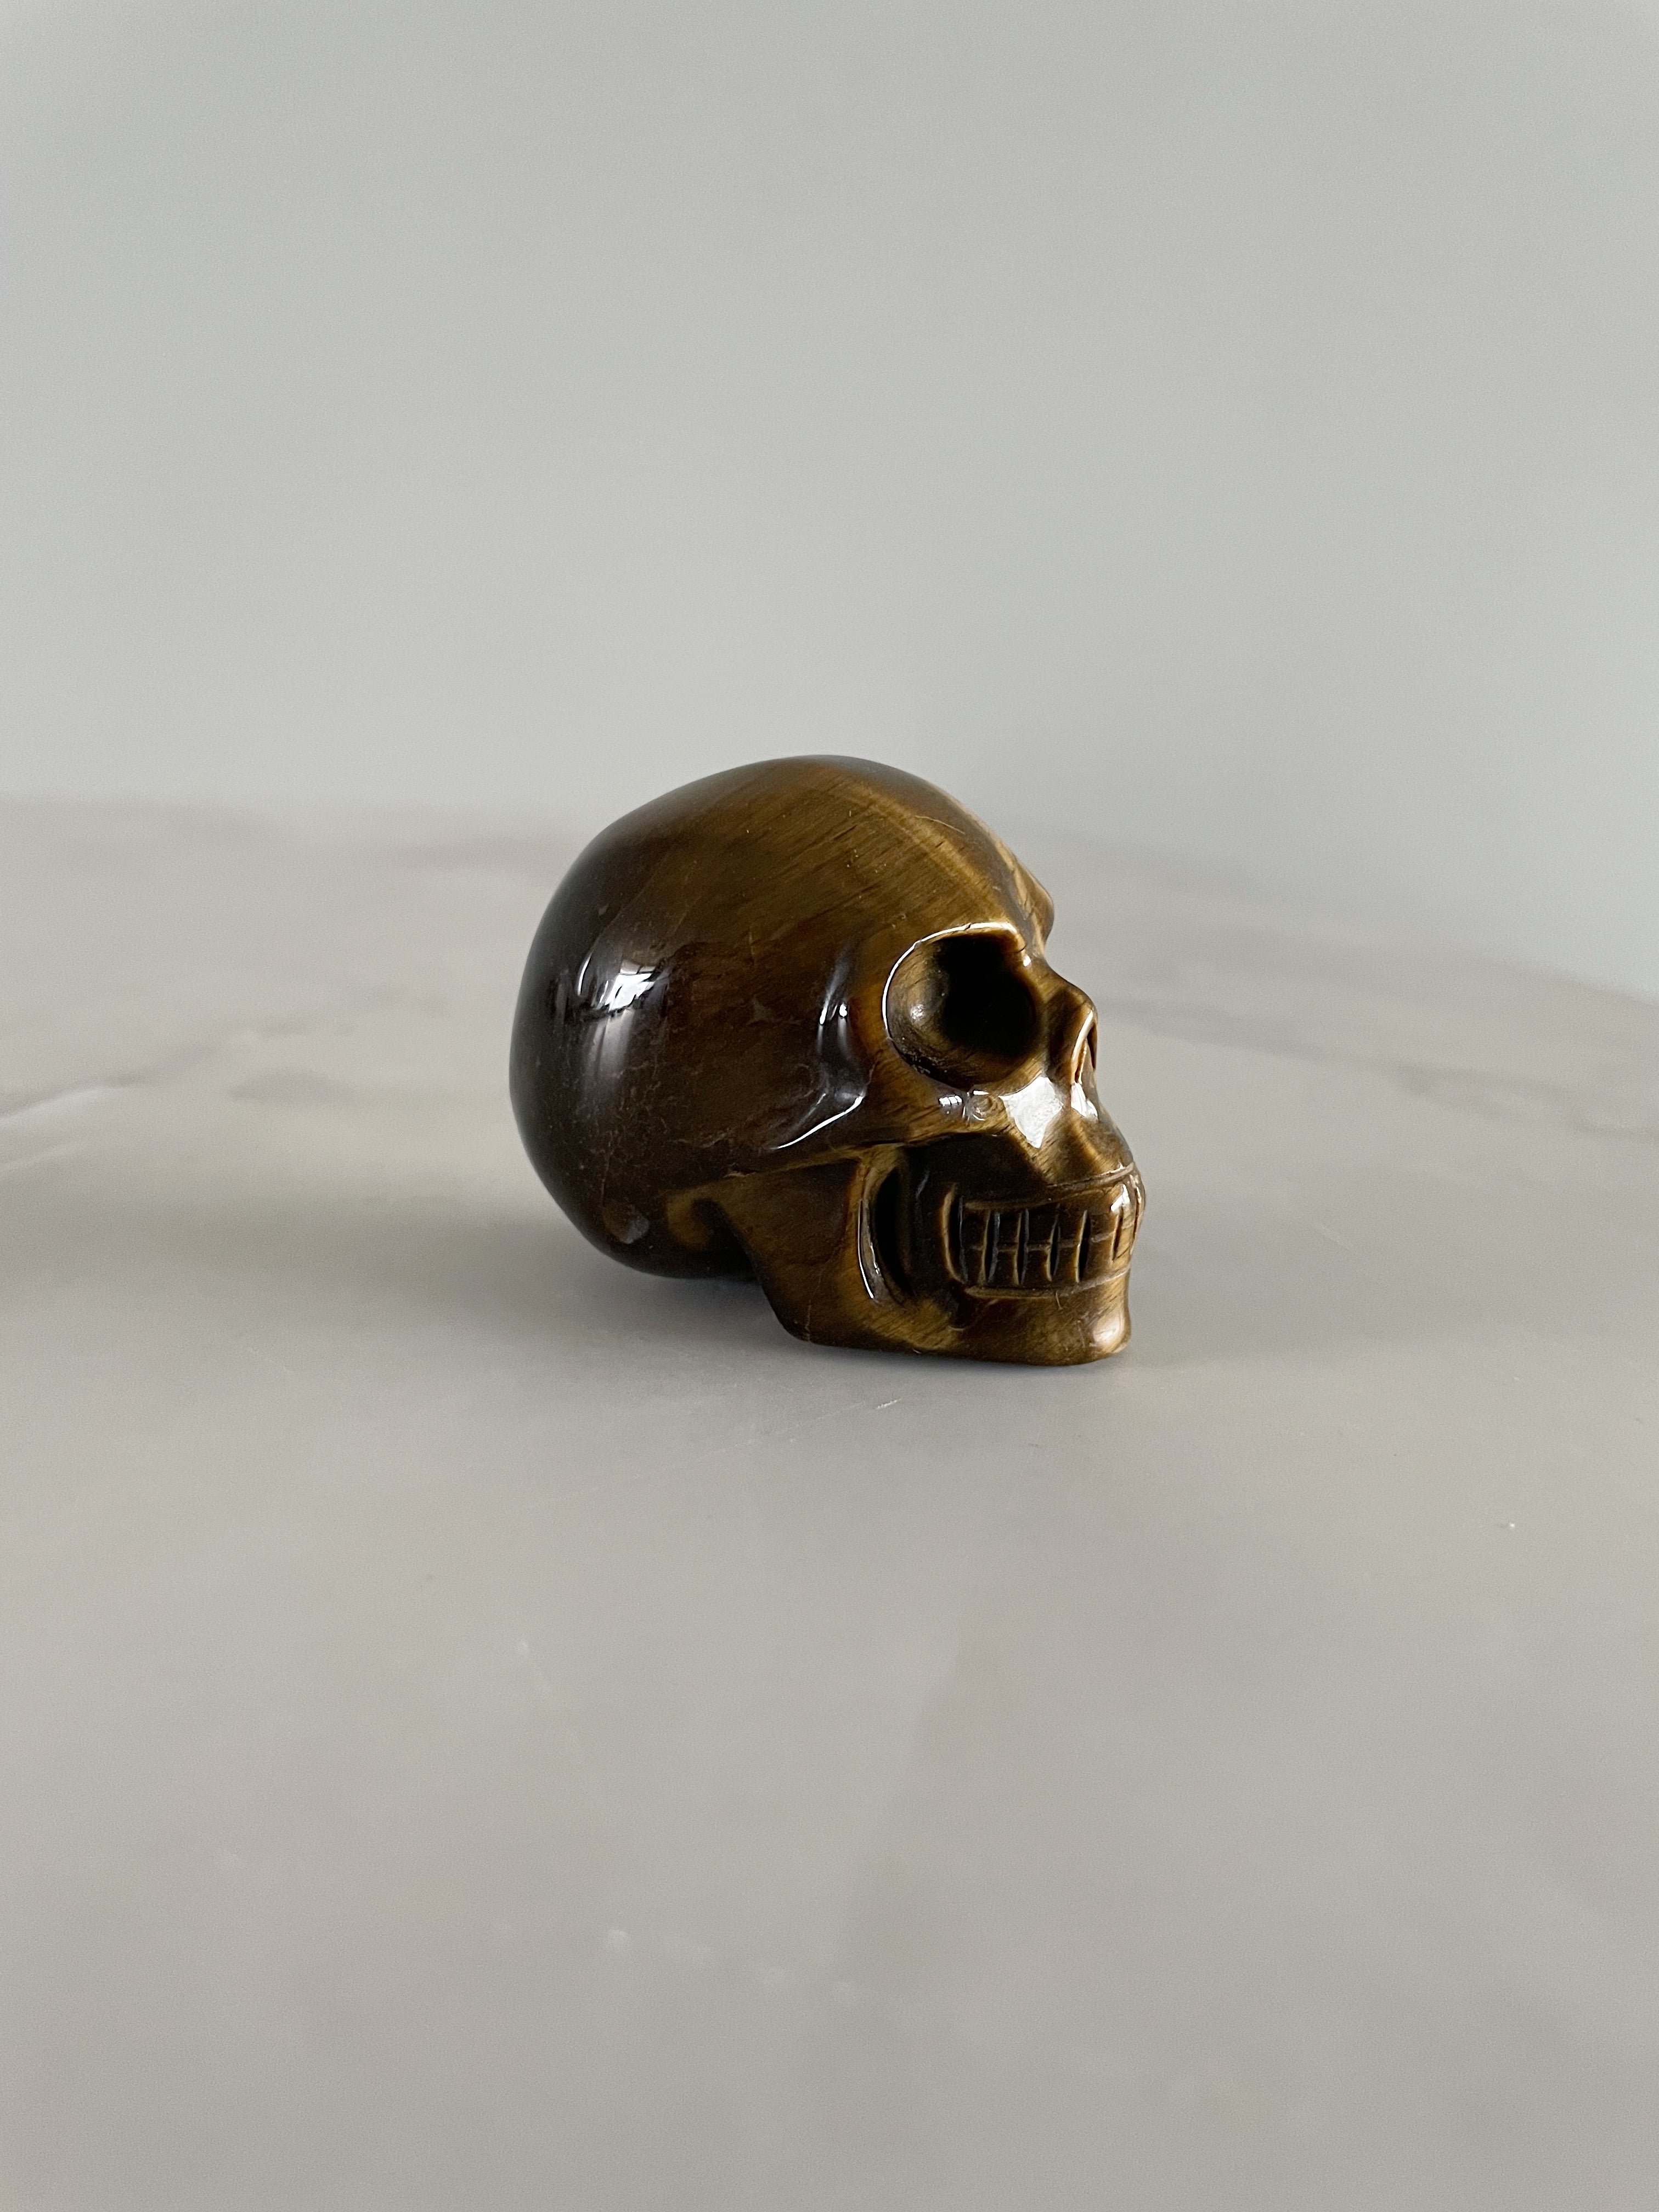 Tijgeroog skull